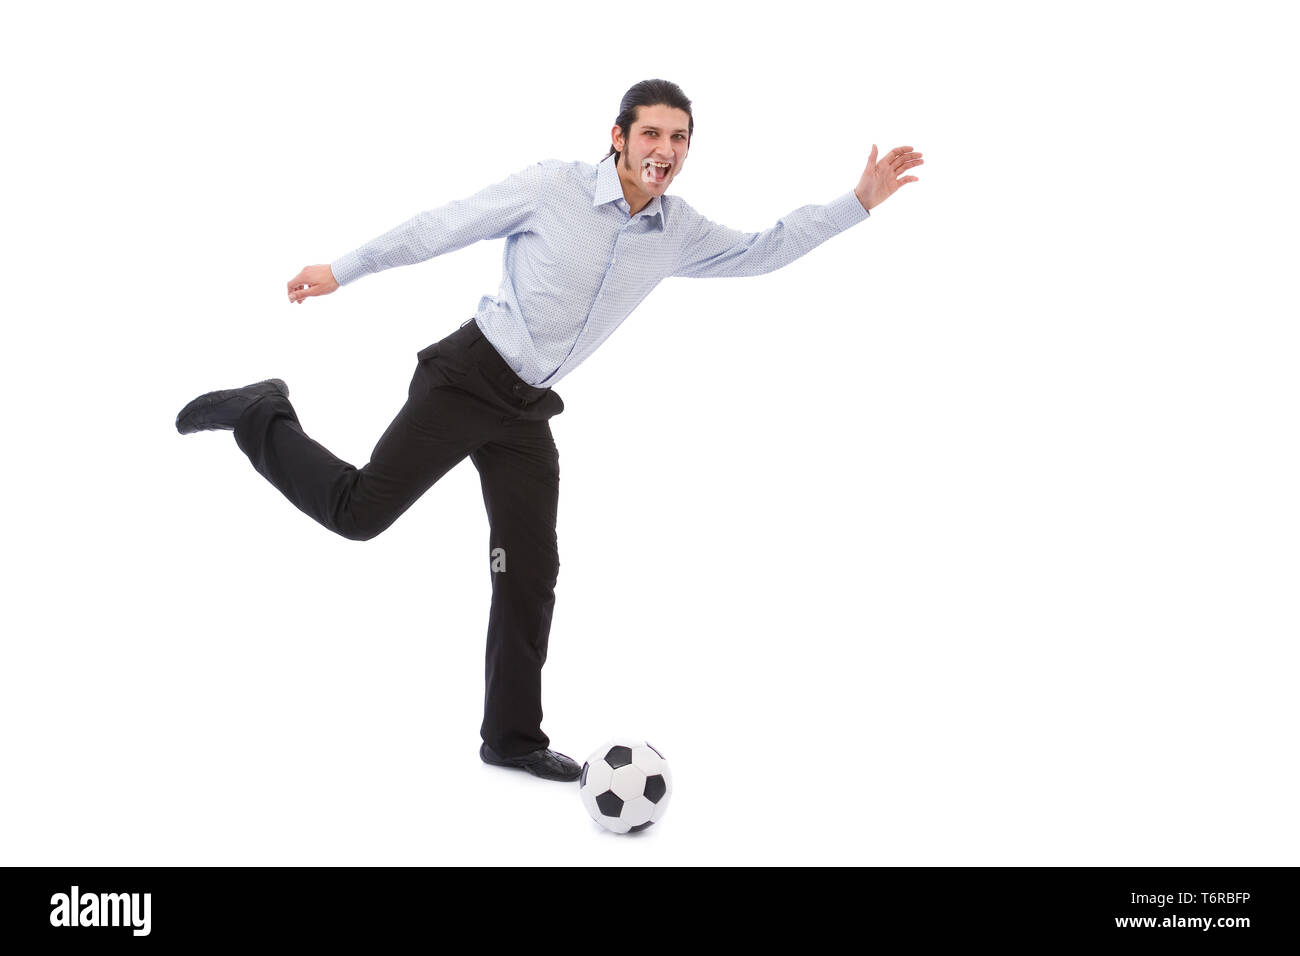 Patear pelota de futbol Imágenes recortadas de stock - Alamy